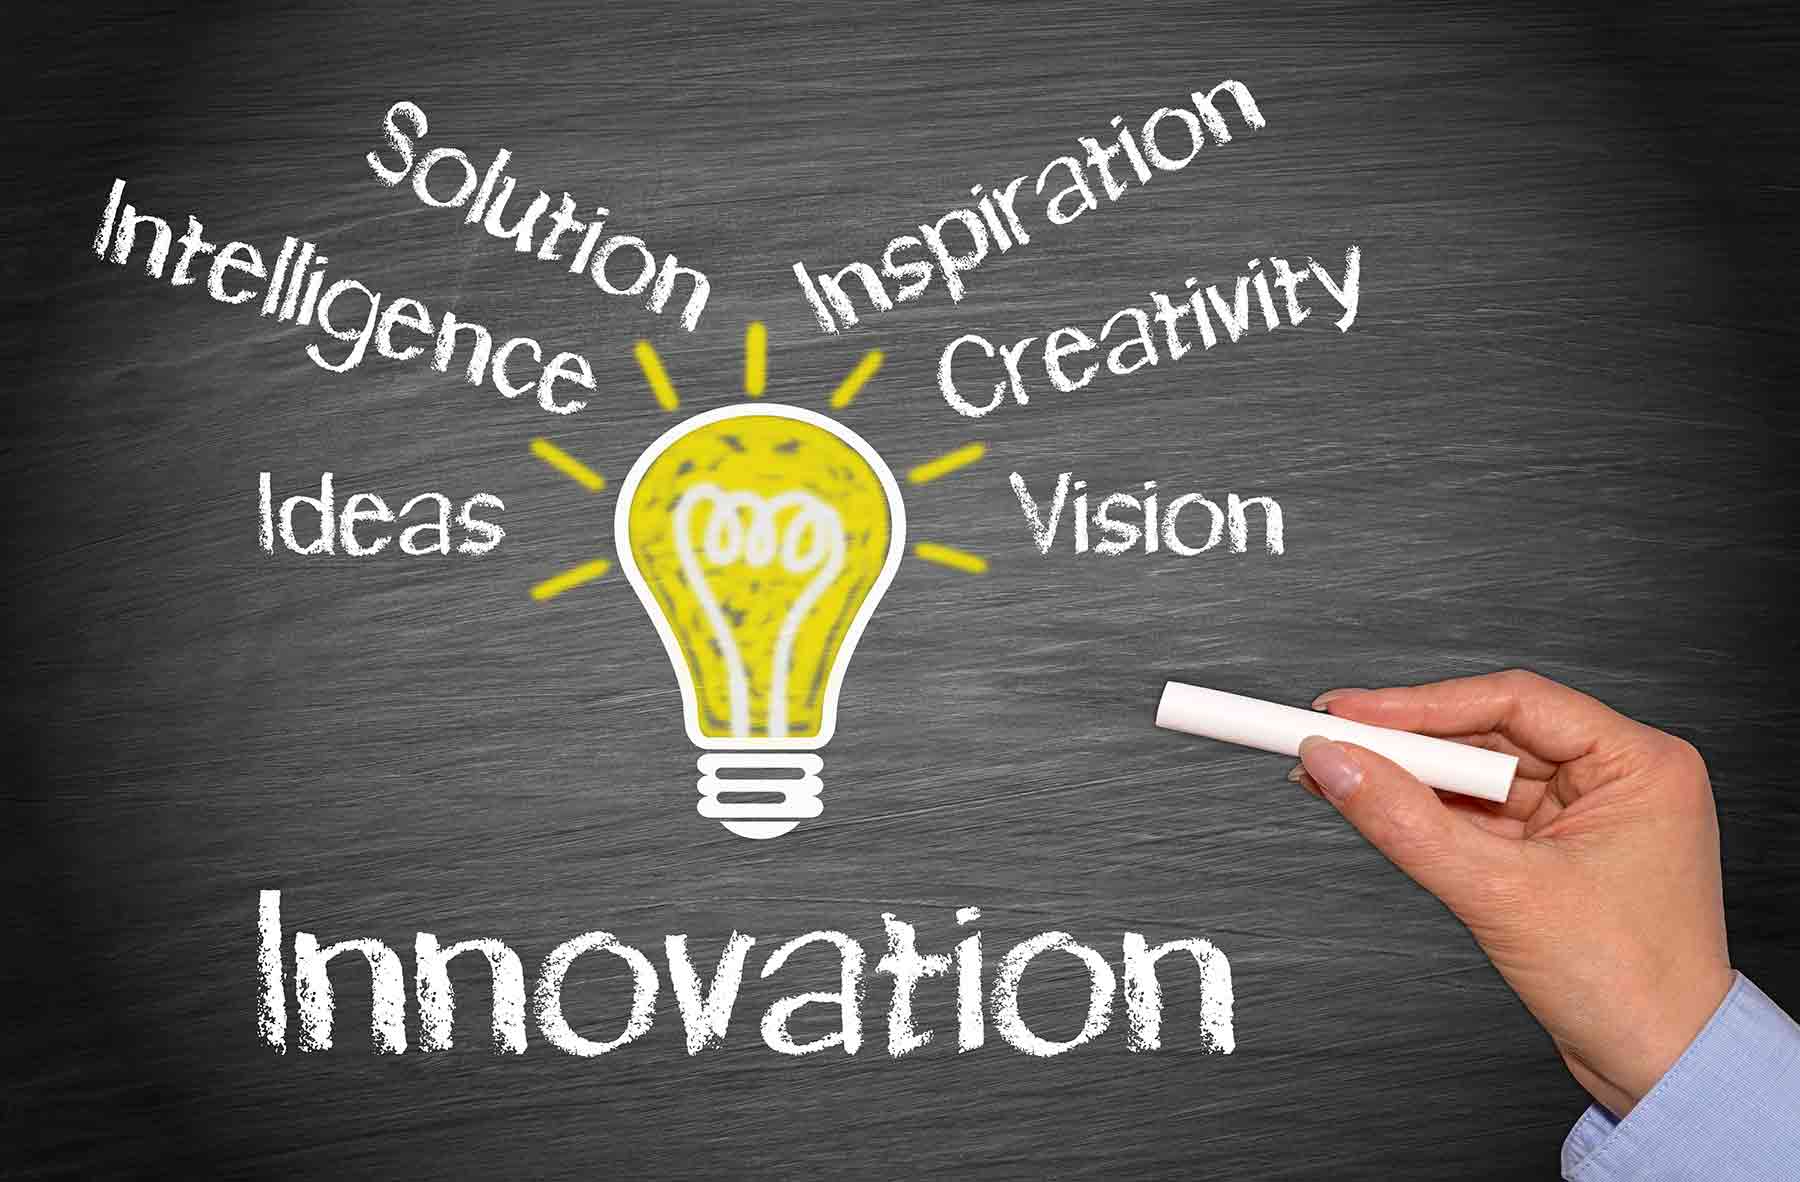 entrepreneurship as innovation and problem solving